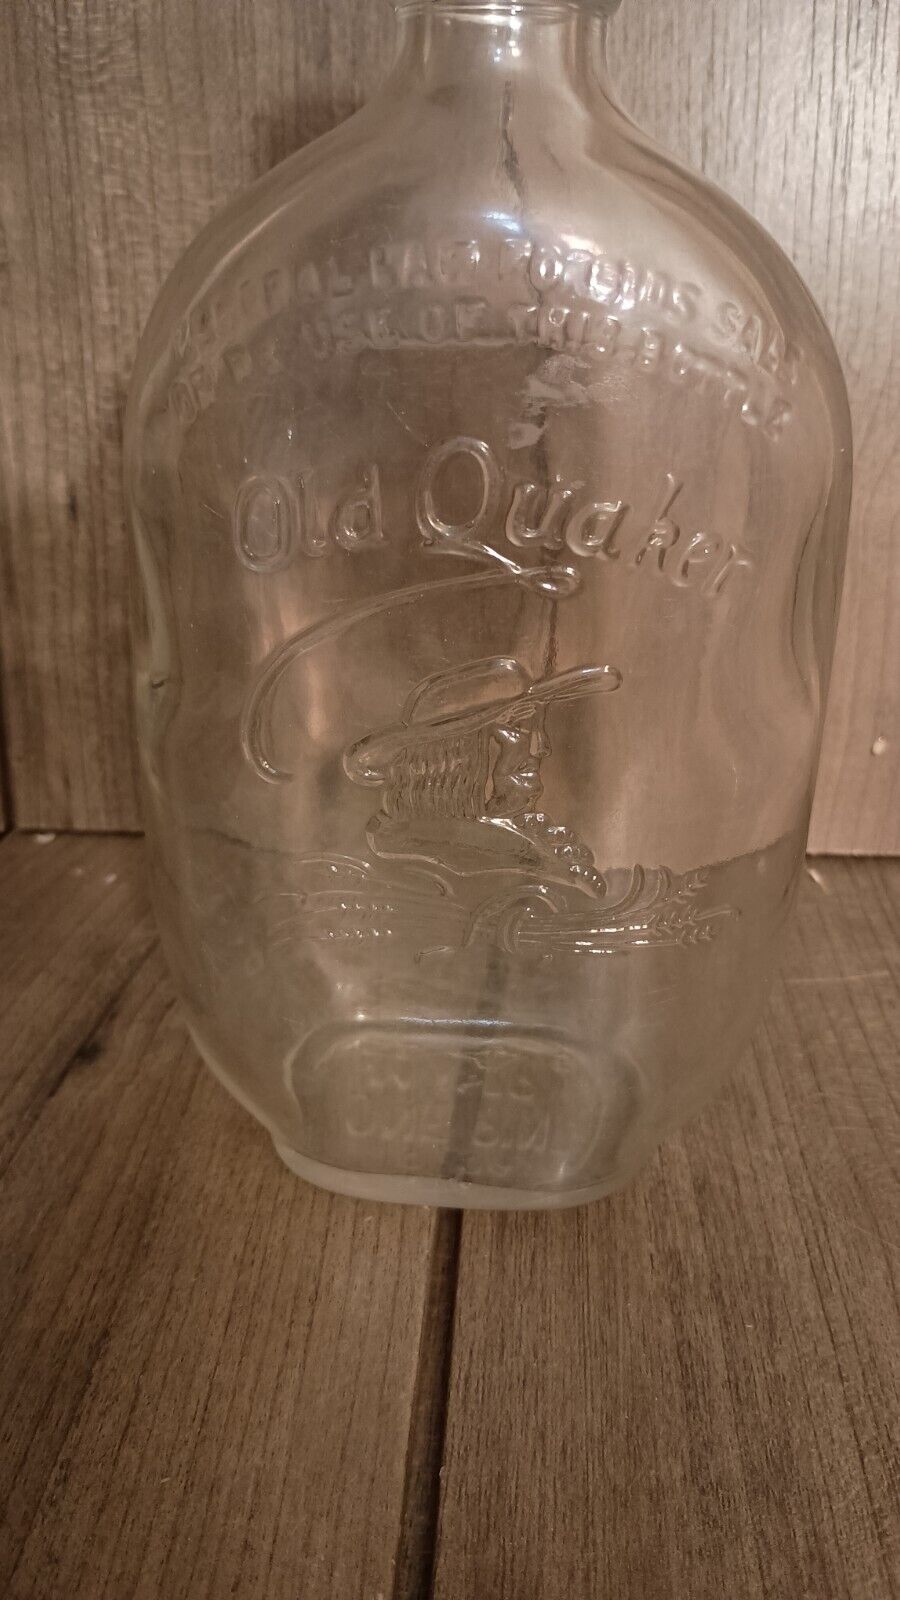 Vintage Old Quaker 1 Pint Whiskey Bottle Clear Embossed